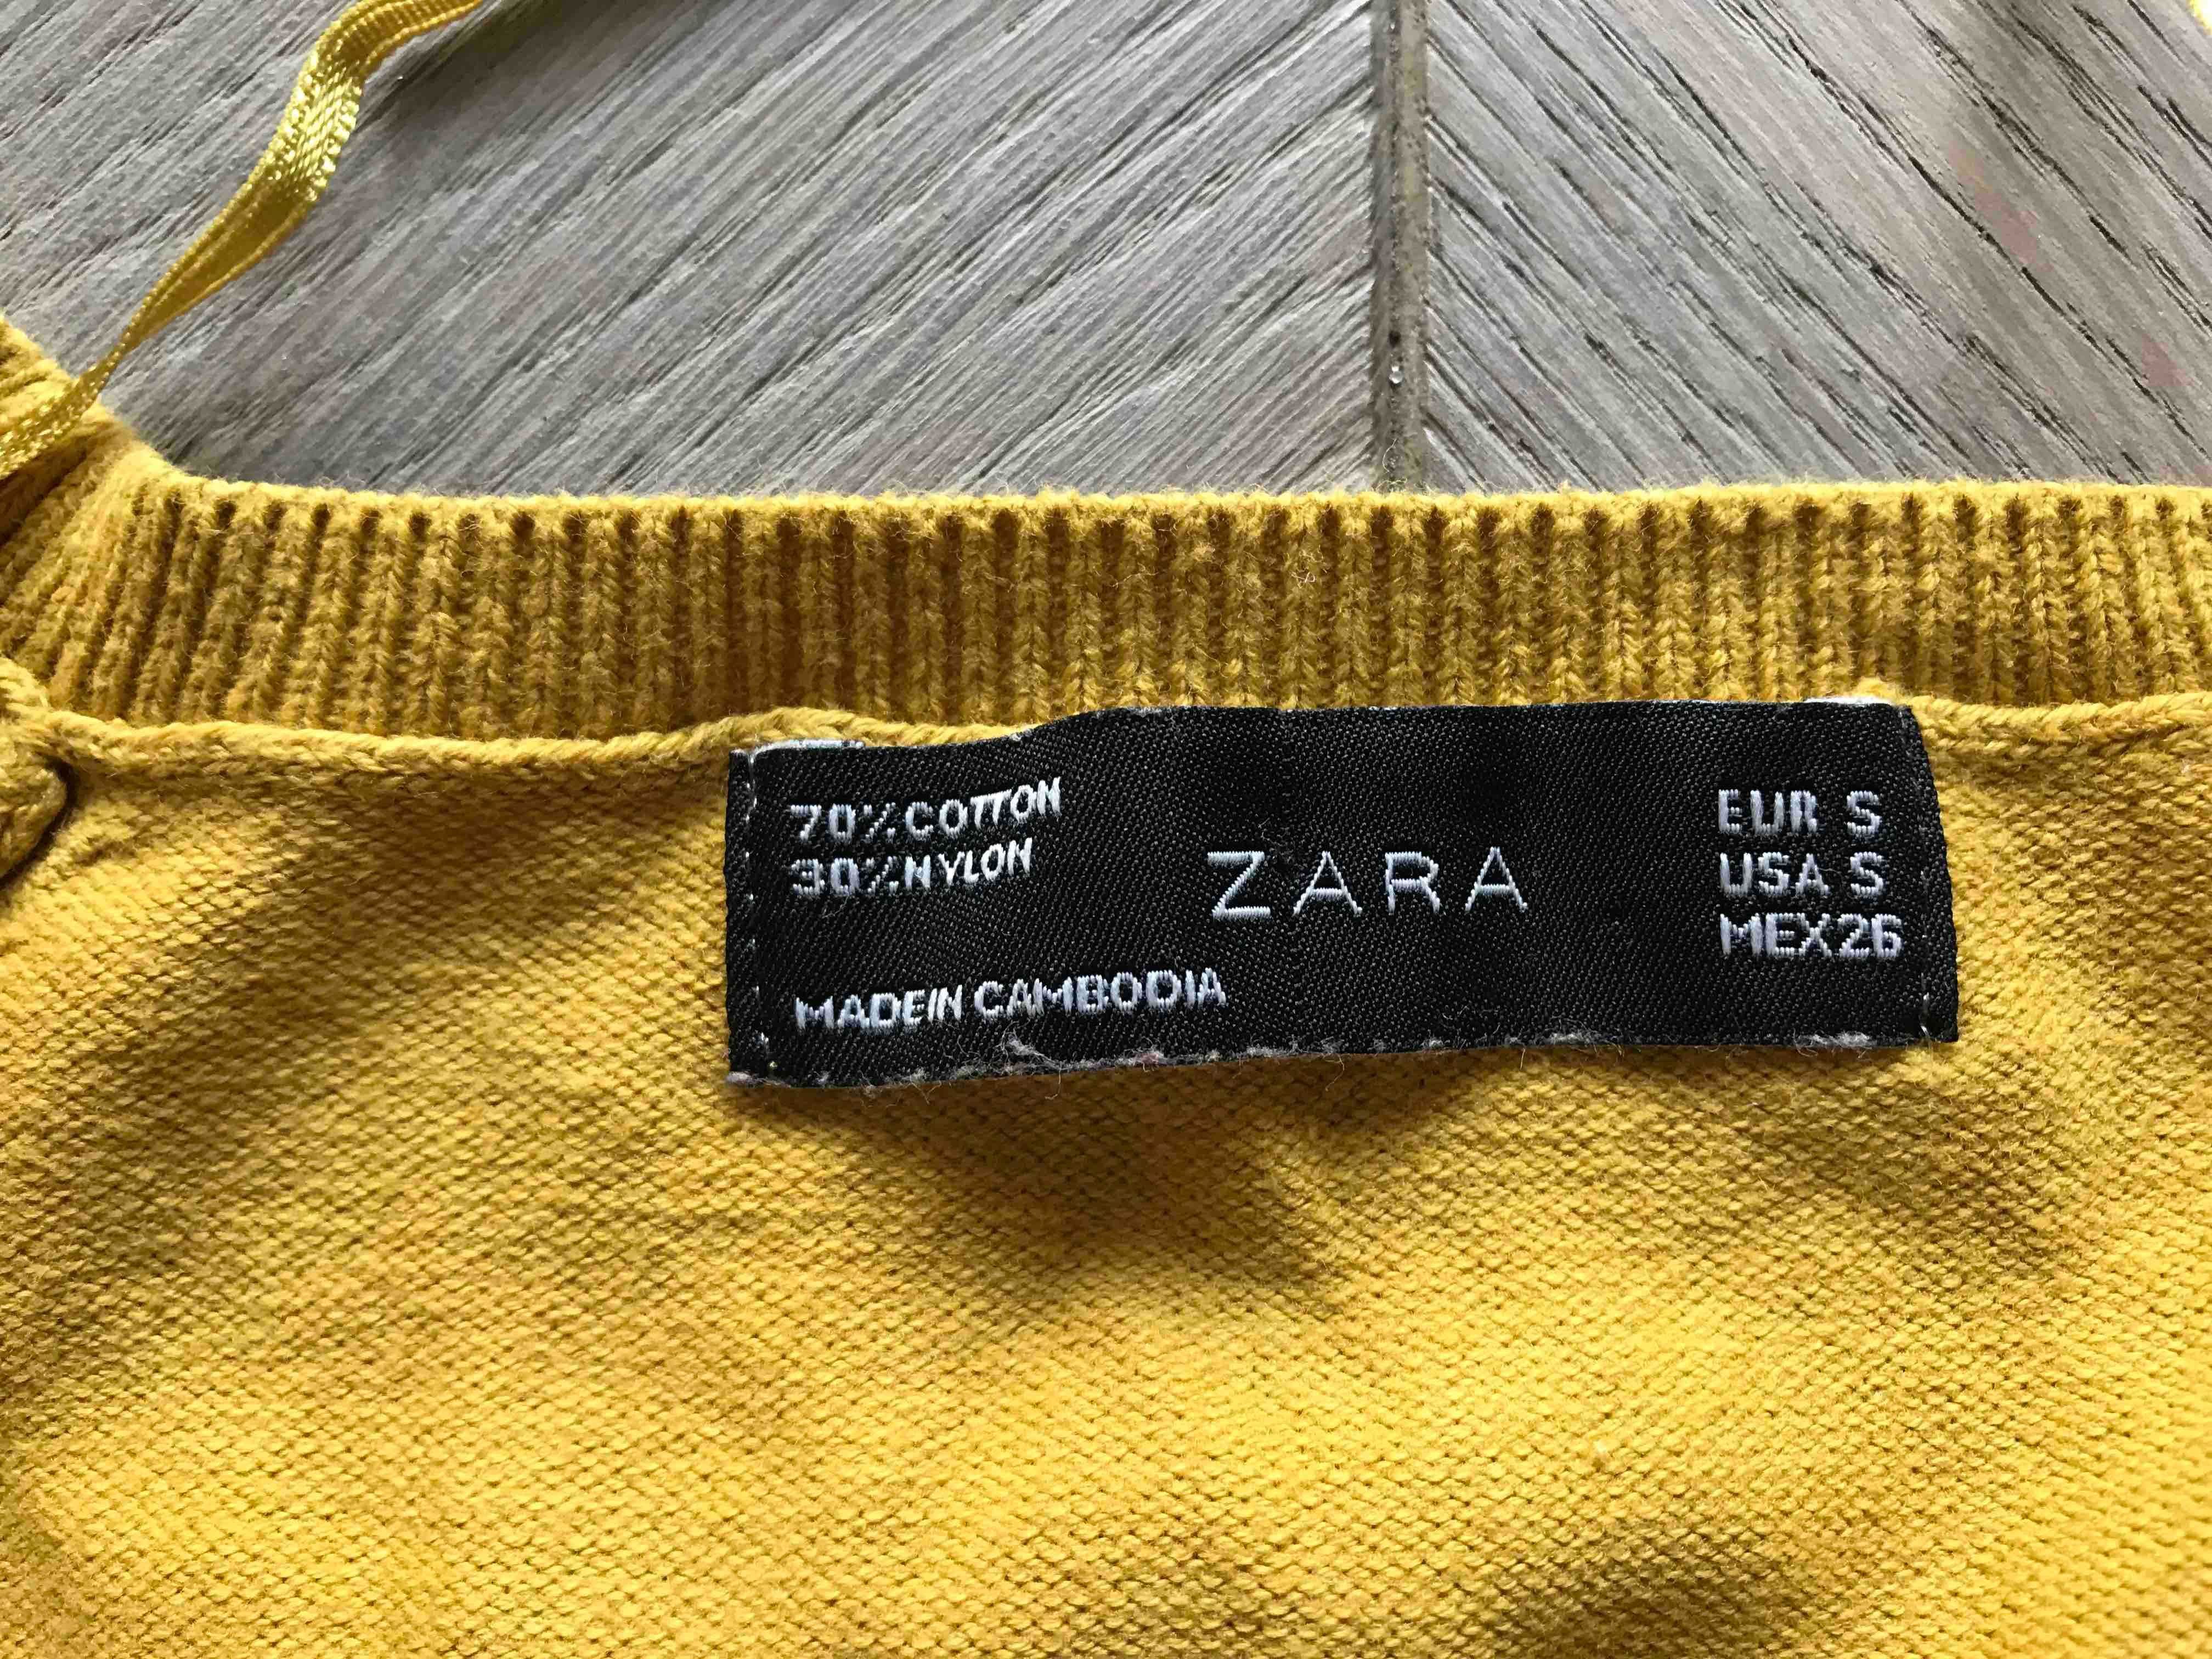 damski sweterek marki Zara rozmiar S